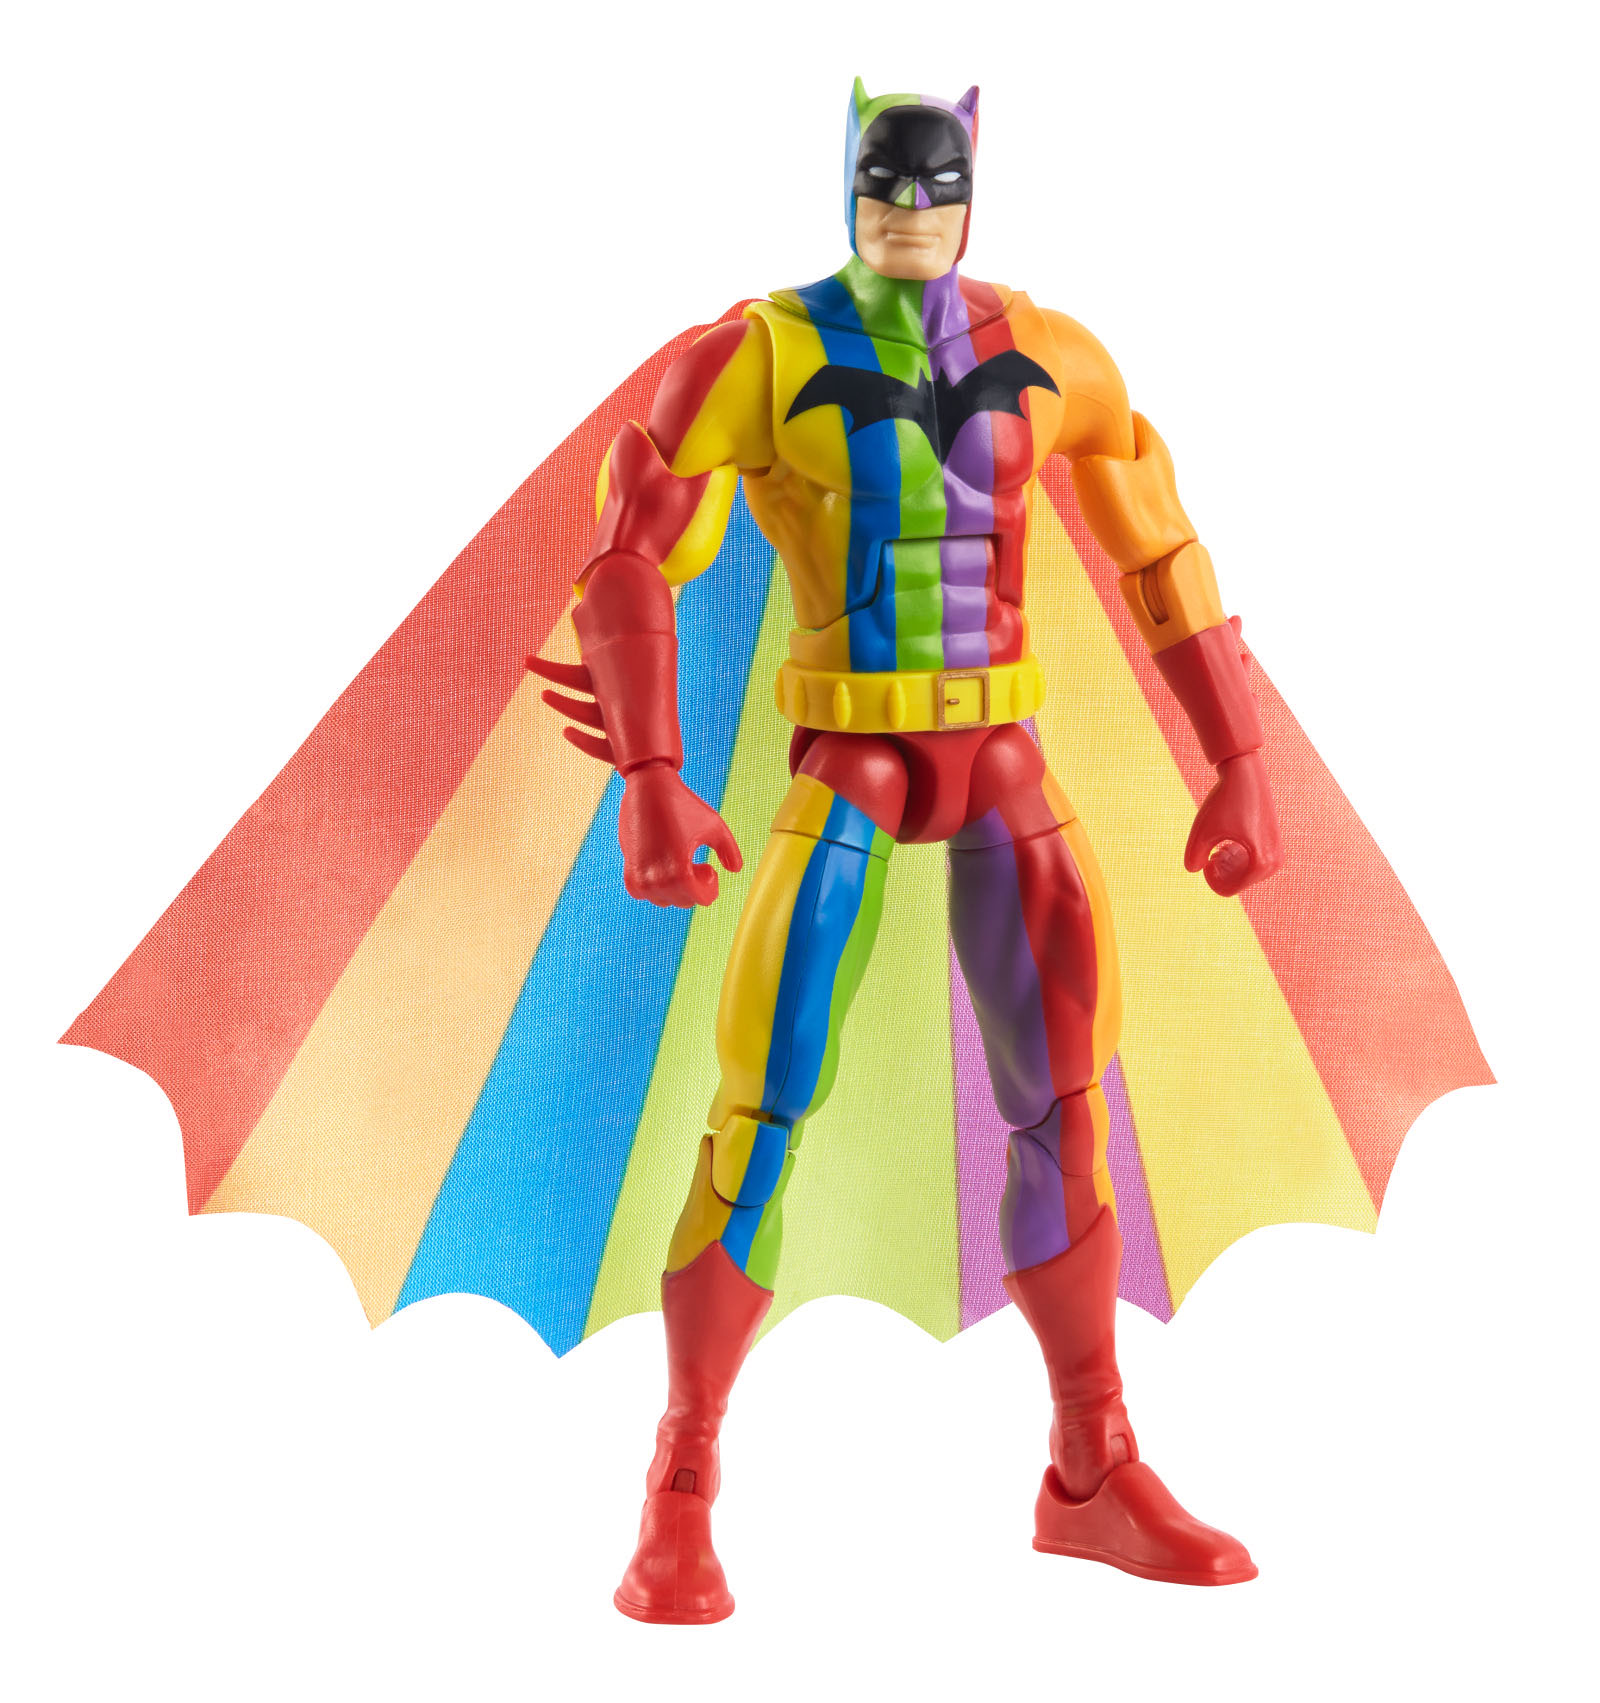 rainbow suit batman News, Rumors and Information - Bleeding Cool News And  Rumors Page 1